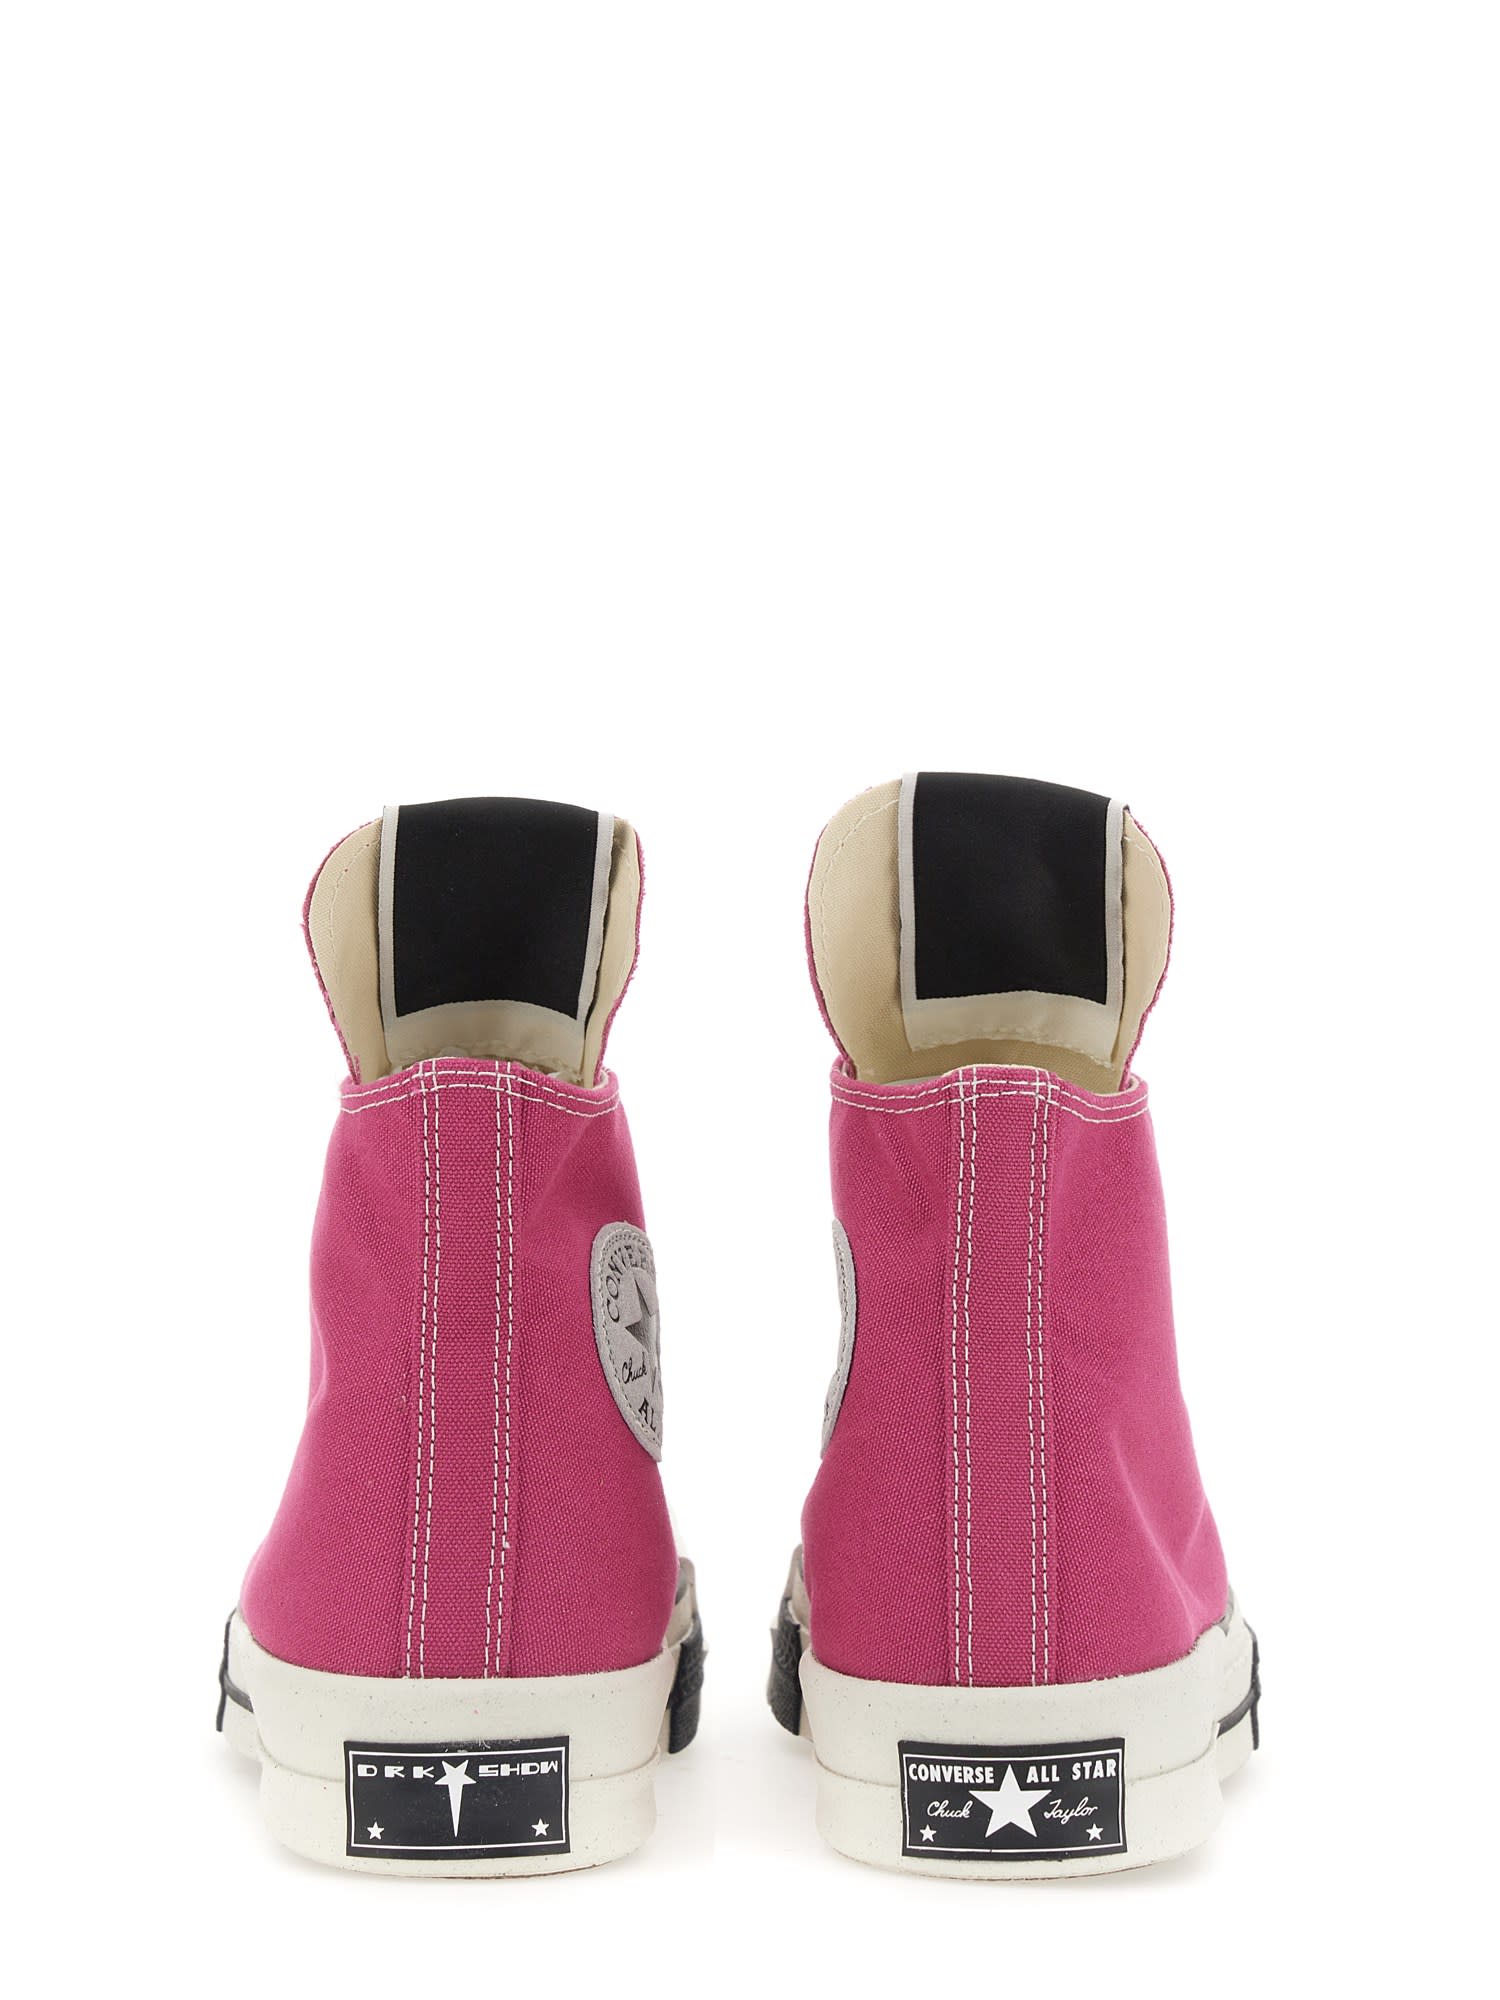 Shop Drkshdw Turbodrk Laceless Sneaker In Hot Pink